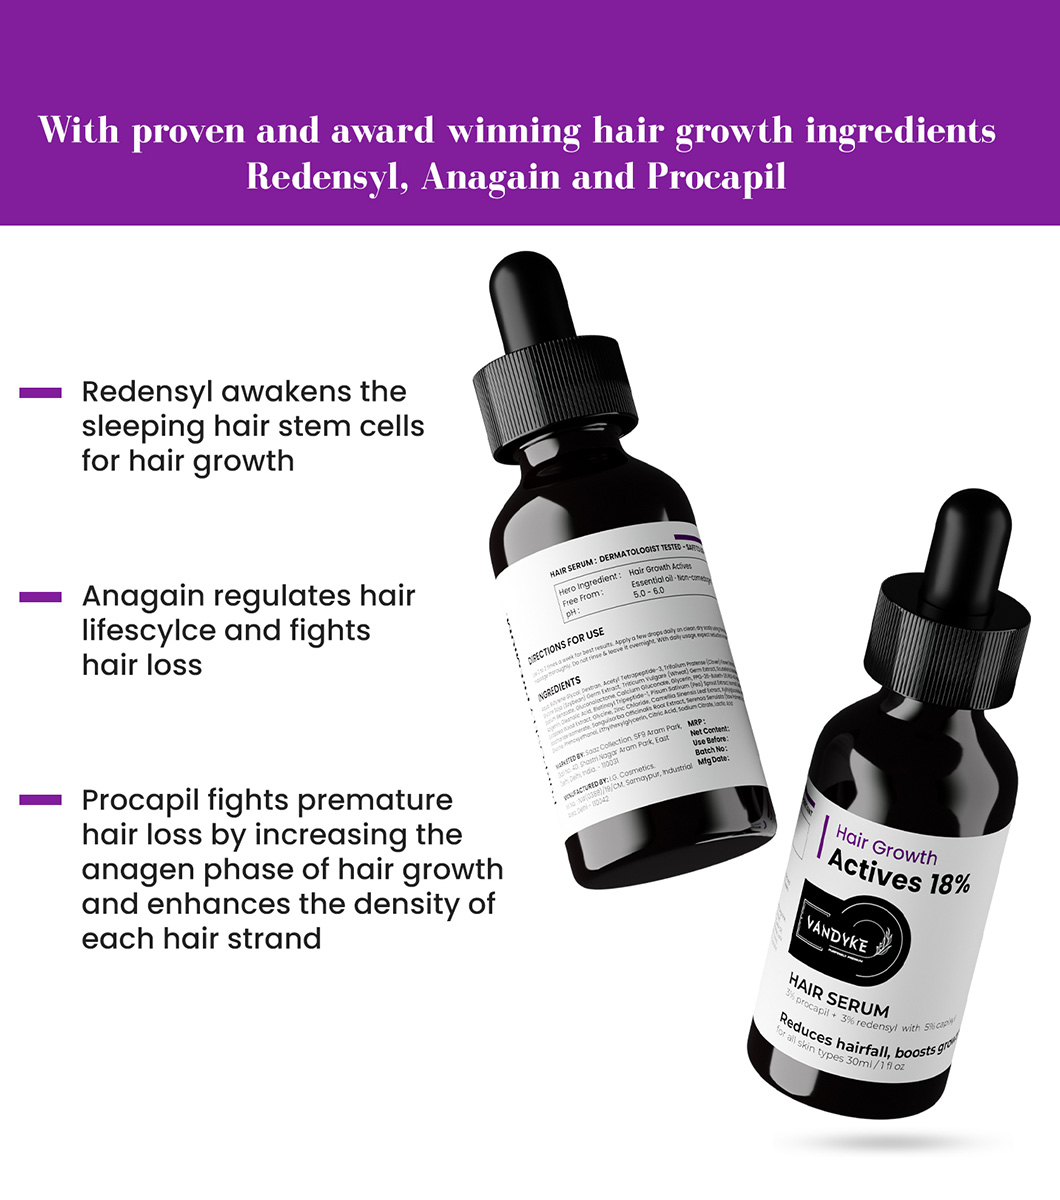 Hair Growth Actives 18% Hair Serum - Vandyke